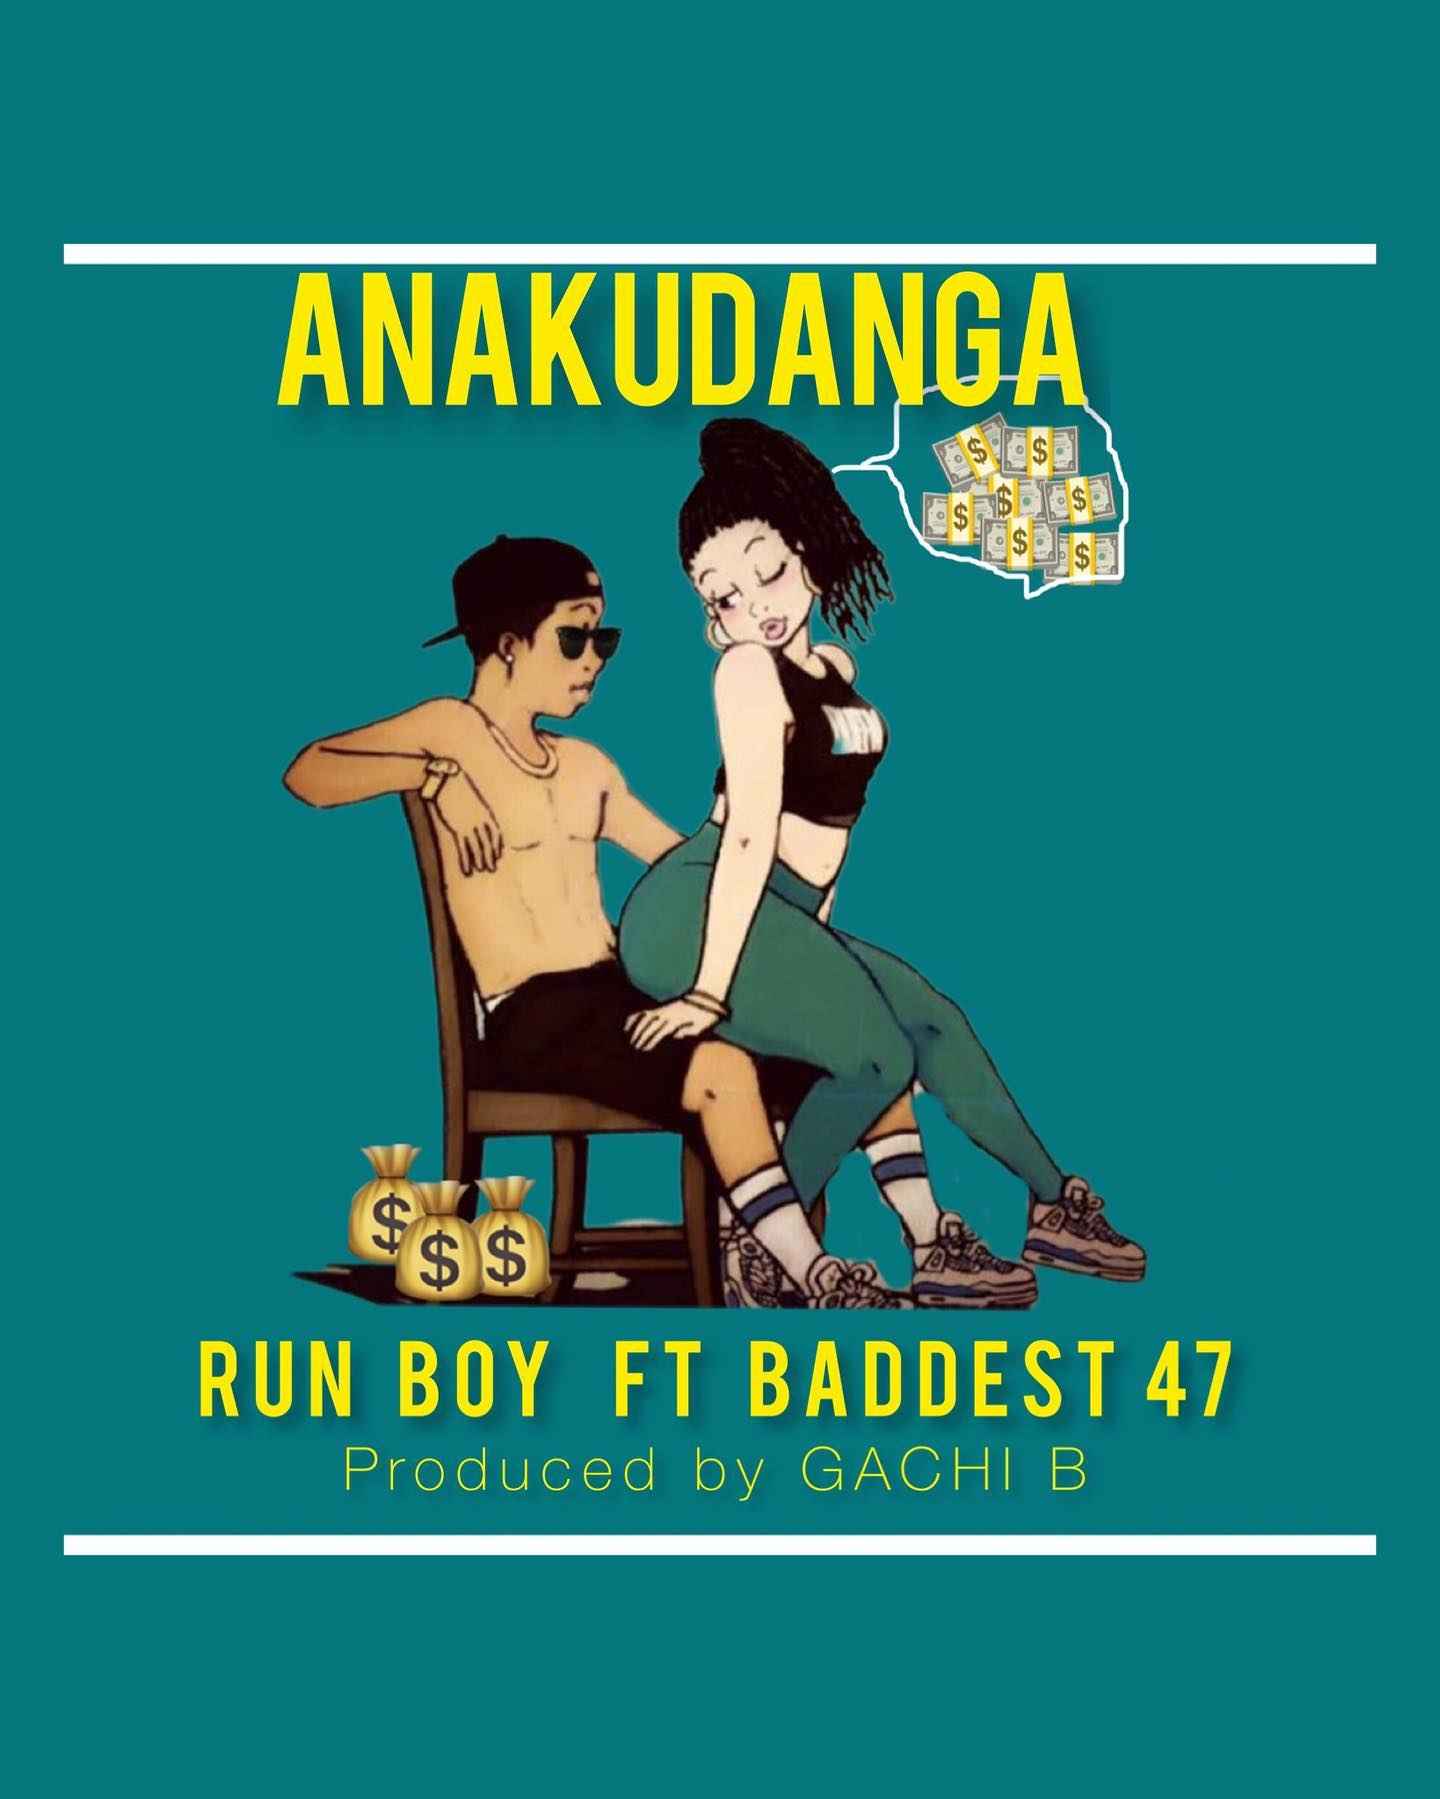 Run Boy ft Baddest 47 - Anakudanga Mp3 Download